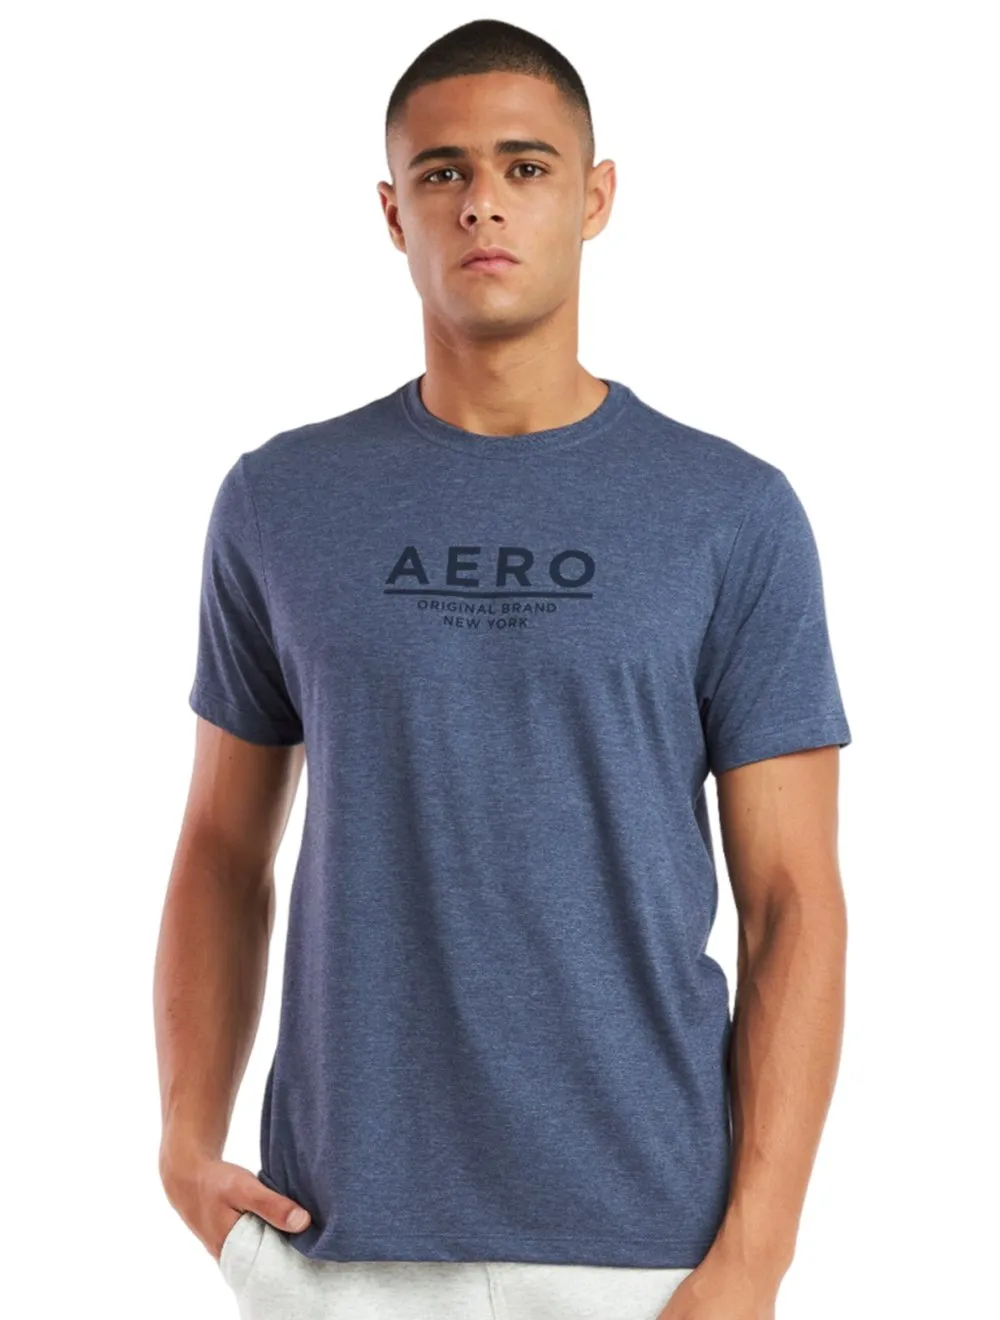 Camiseta Aeropostale Masculina Aero Original Brand New York Marinho Mescla